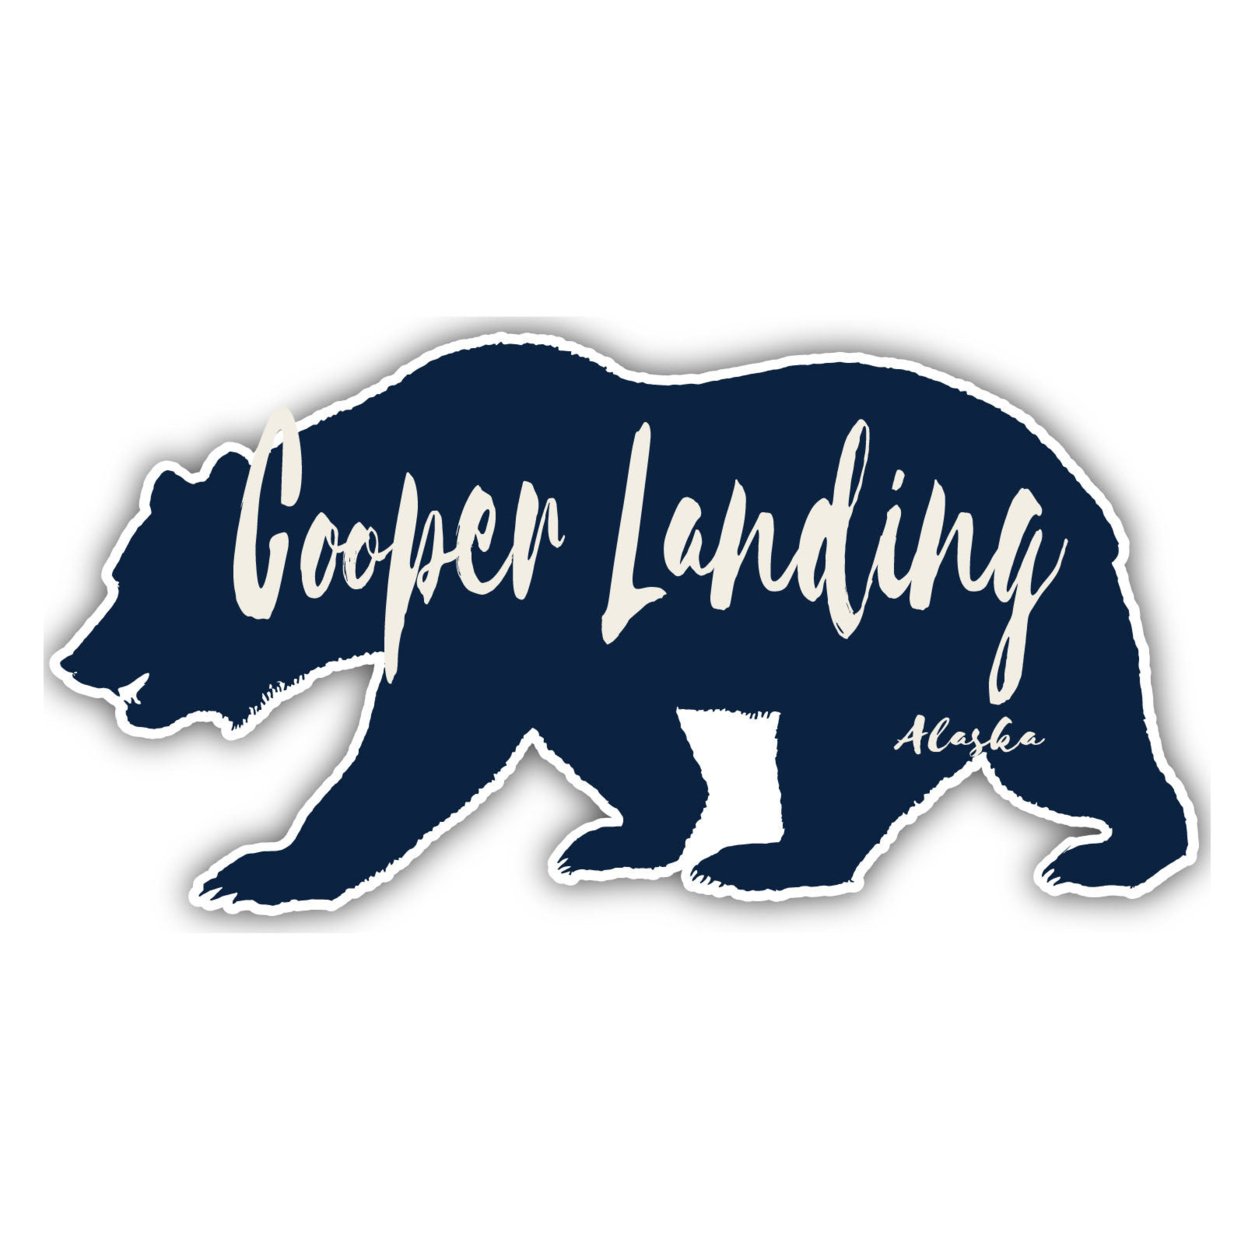 Cooper Landing Alaska Souvenir Decorative Stickers (Choose Theme And Size) - 4-Pack, 8-Inch, Tent